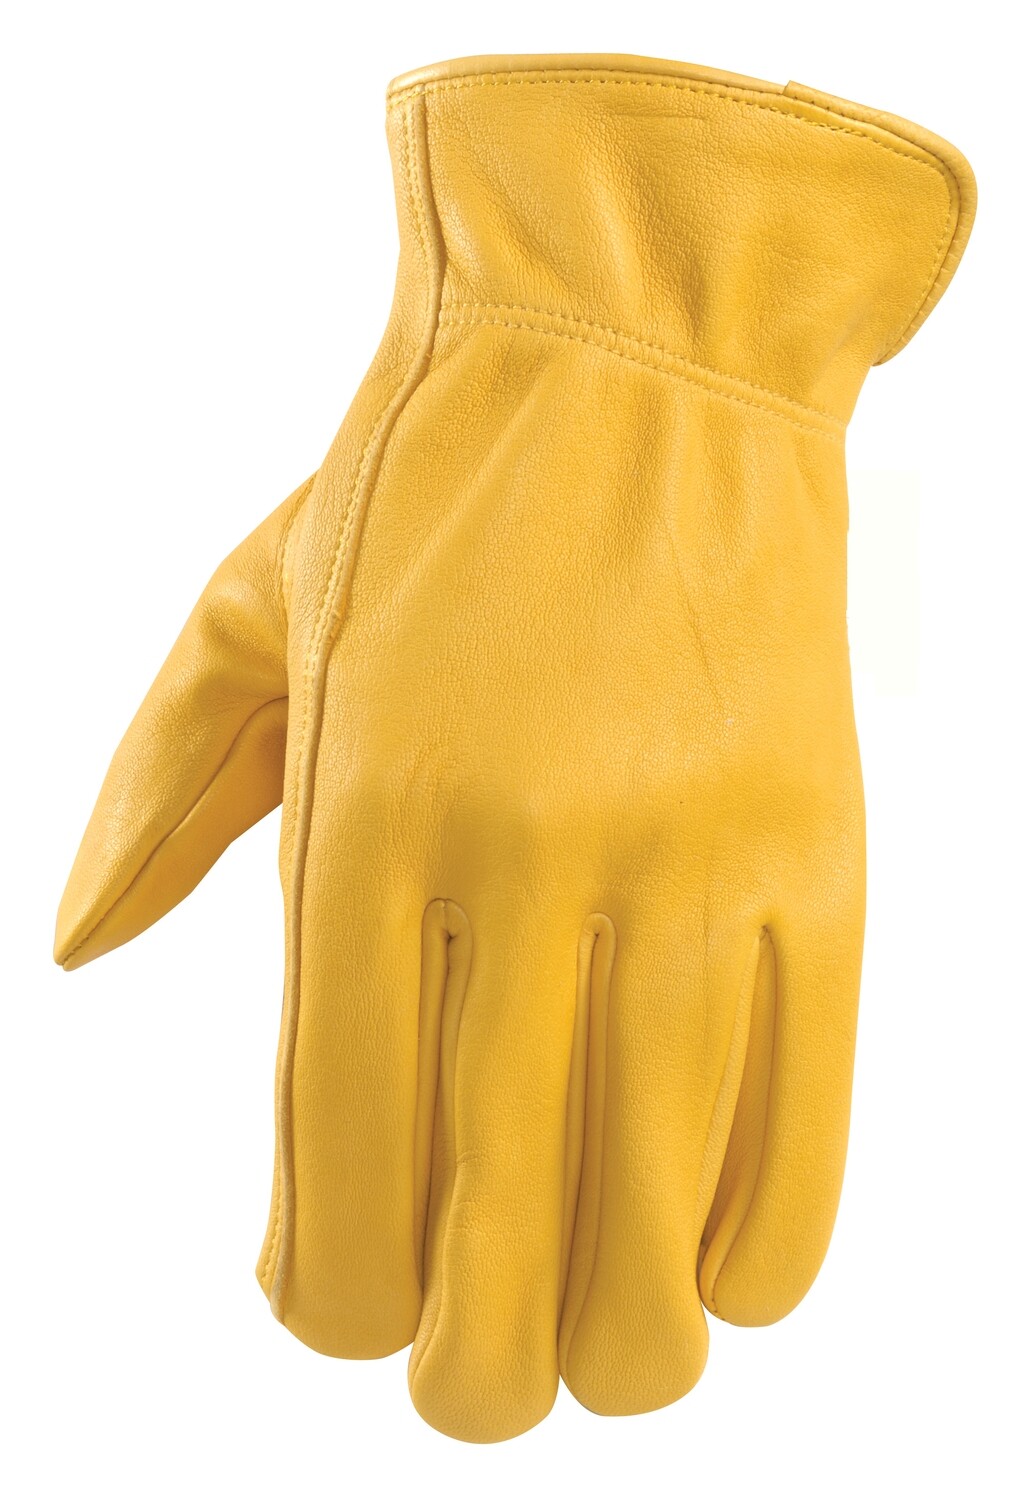 Leather Buff Gloves (plain-no emblem)